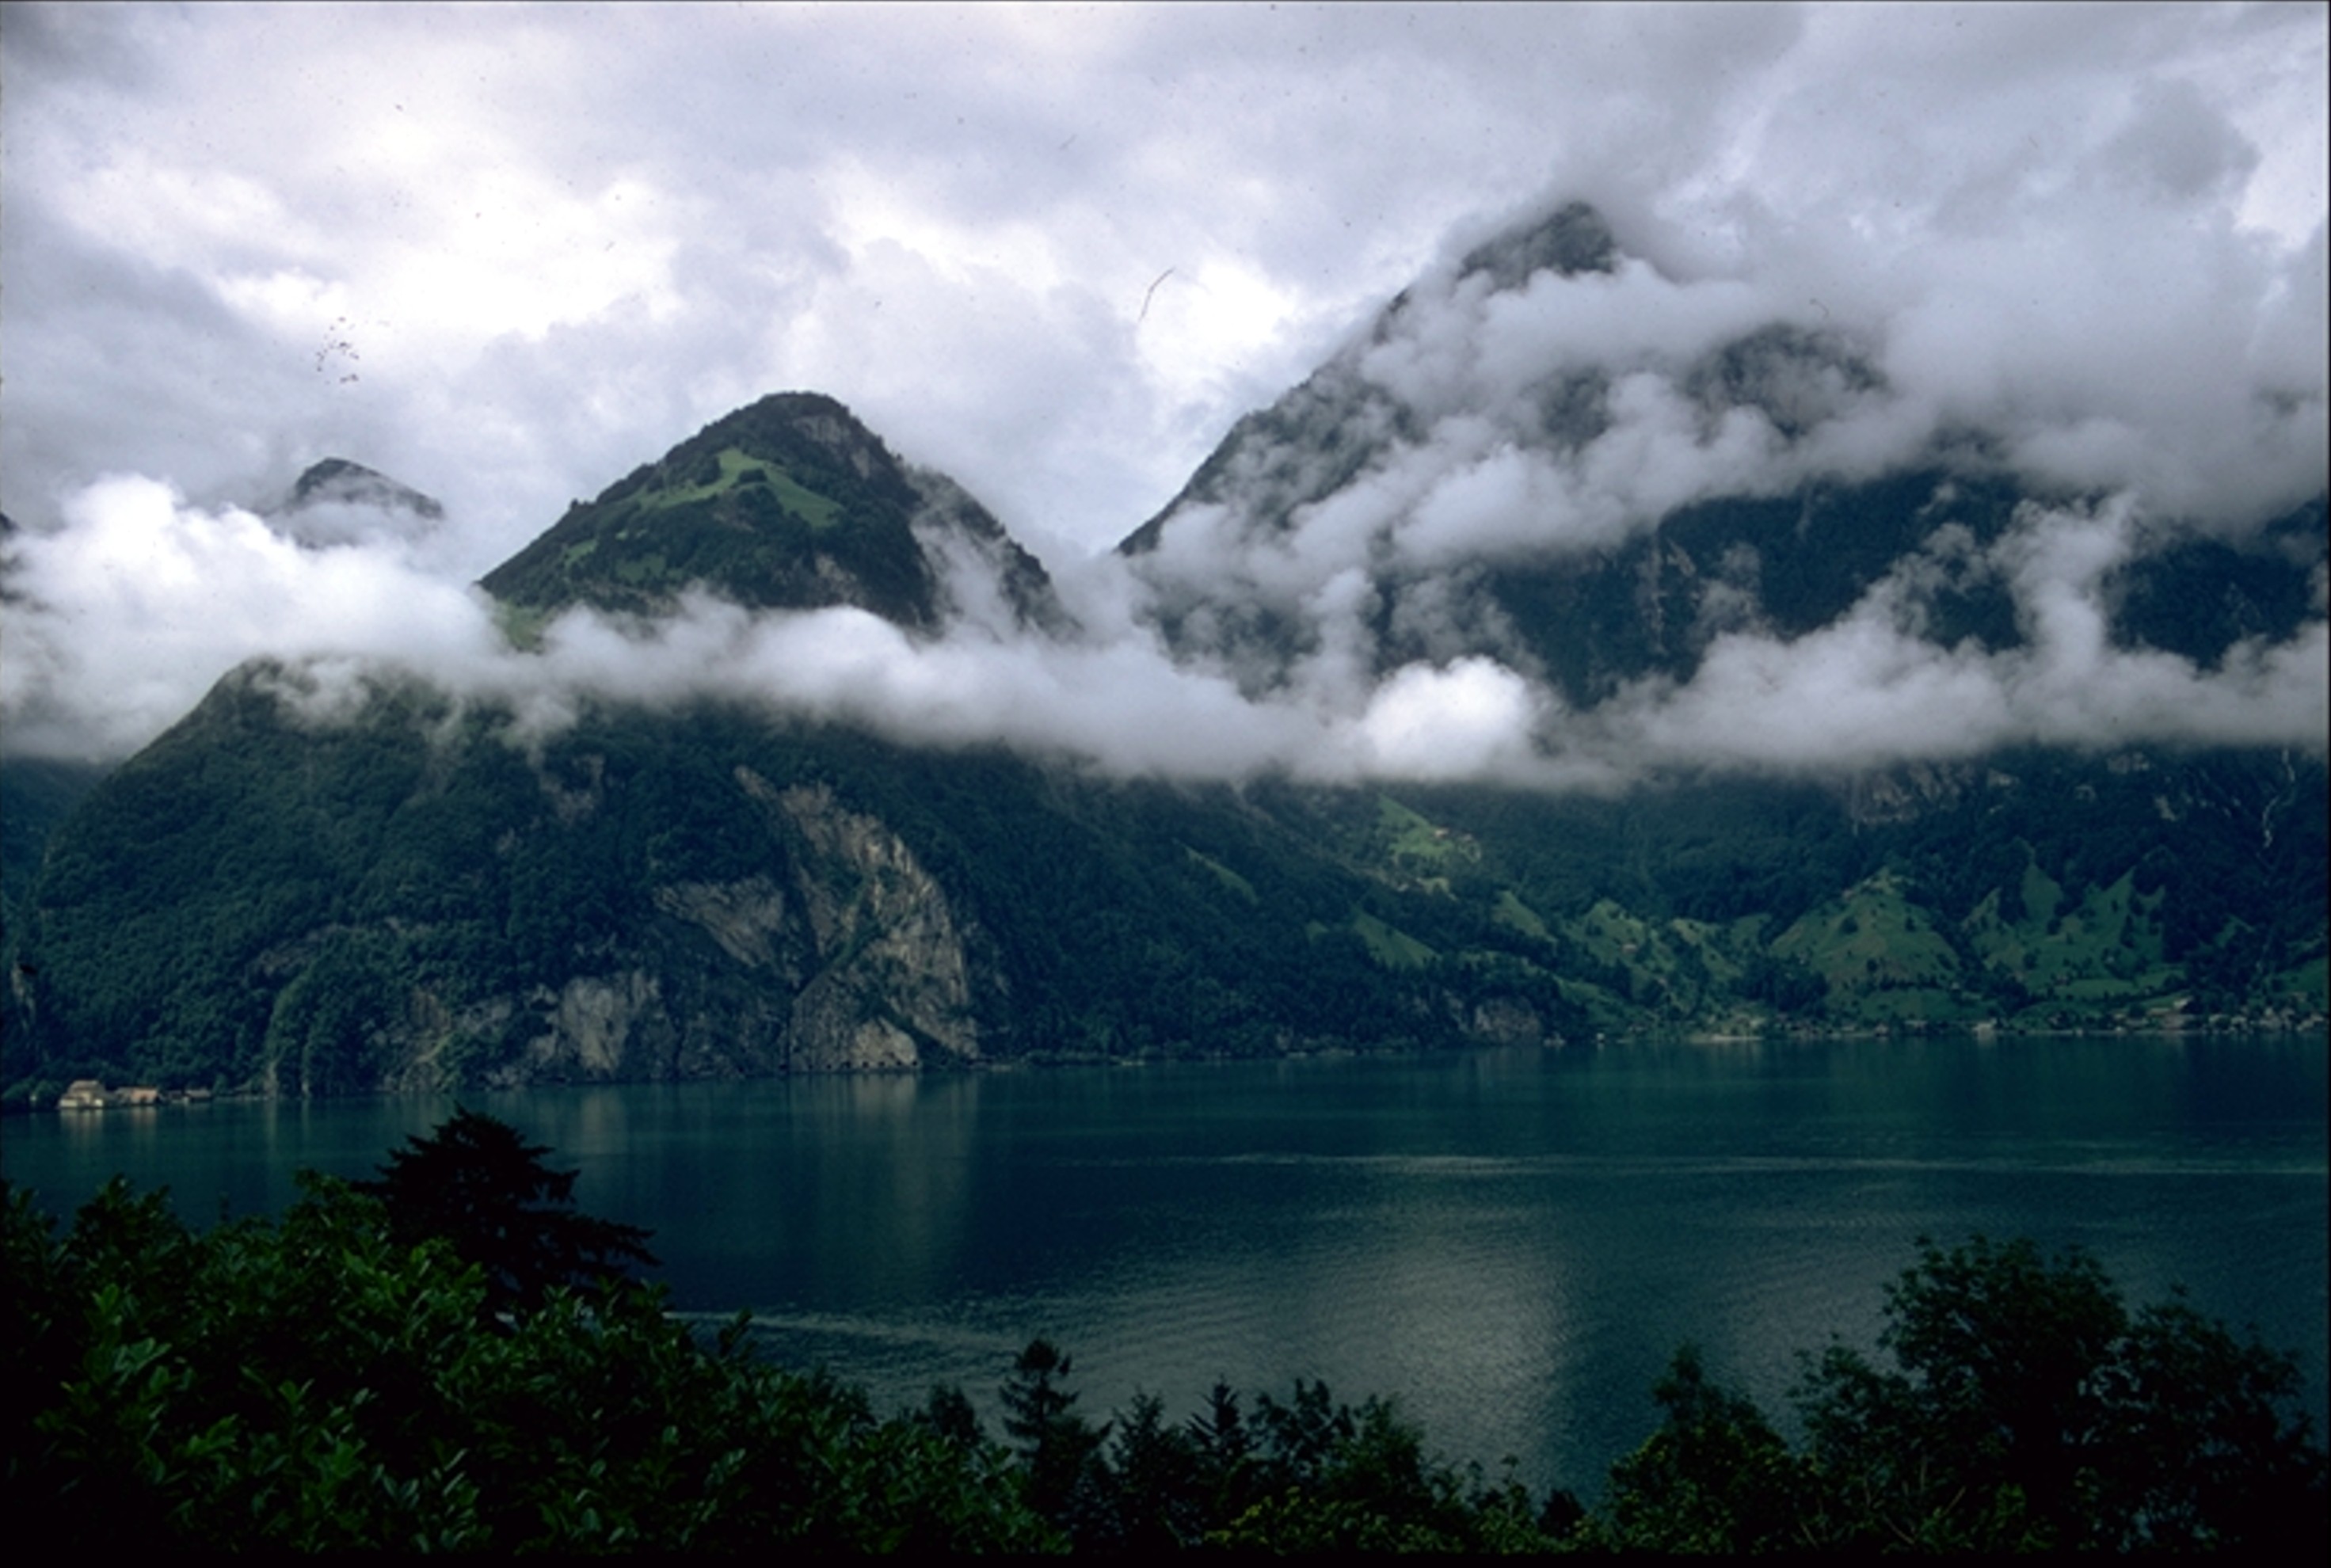 water clouds and hills Switzerland 1971